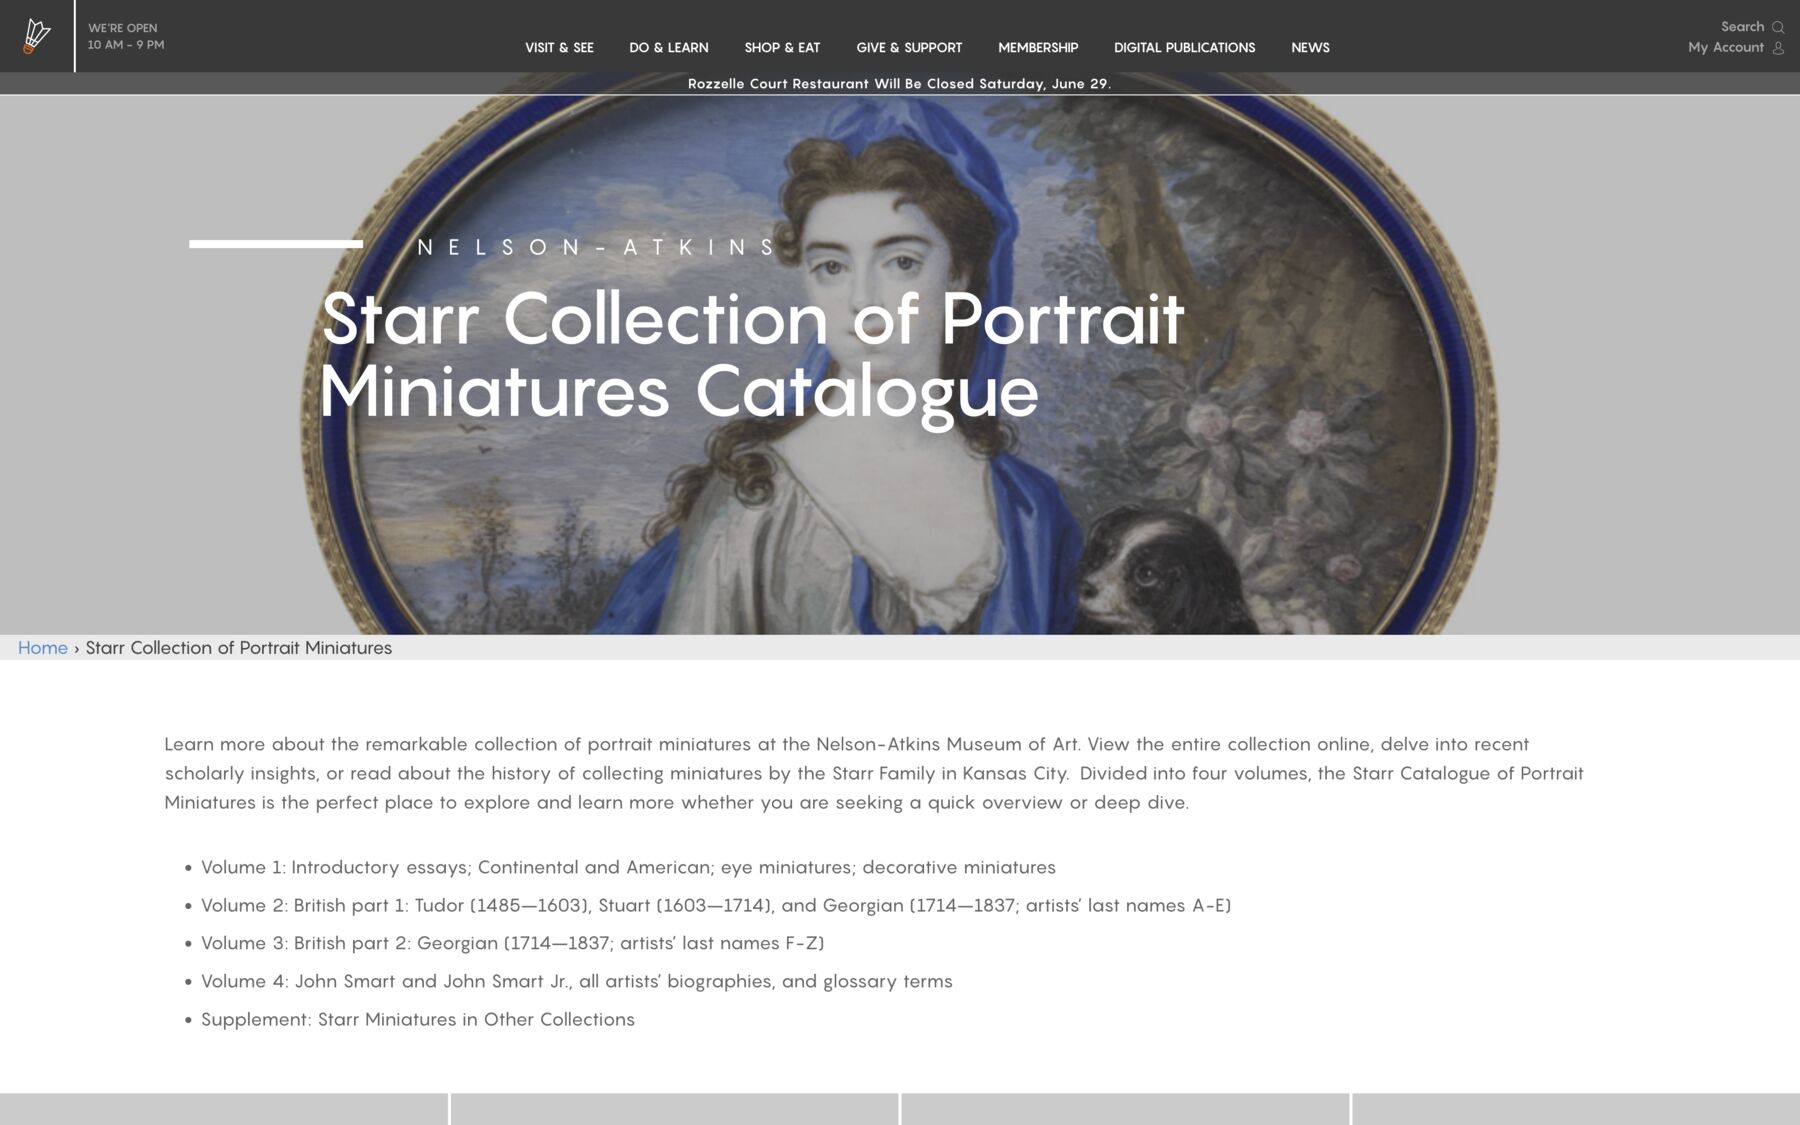 NELSON-ATKINS. Starr Collection of Portrait Miniatures Catalogue